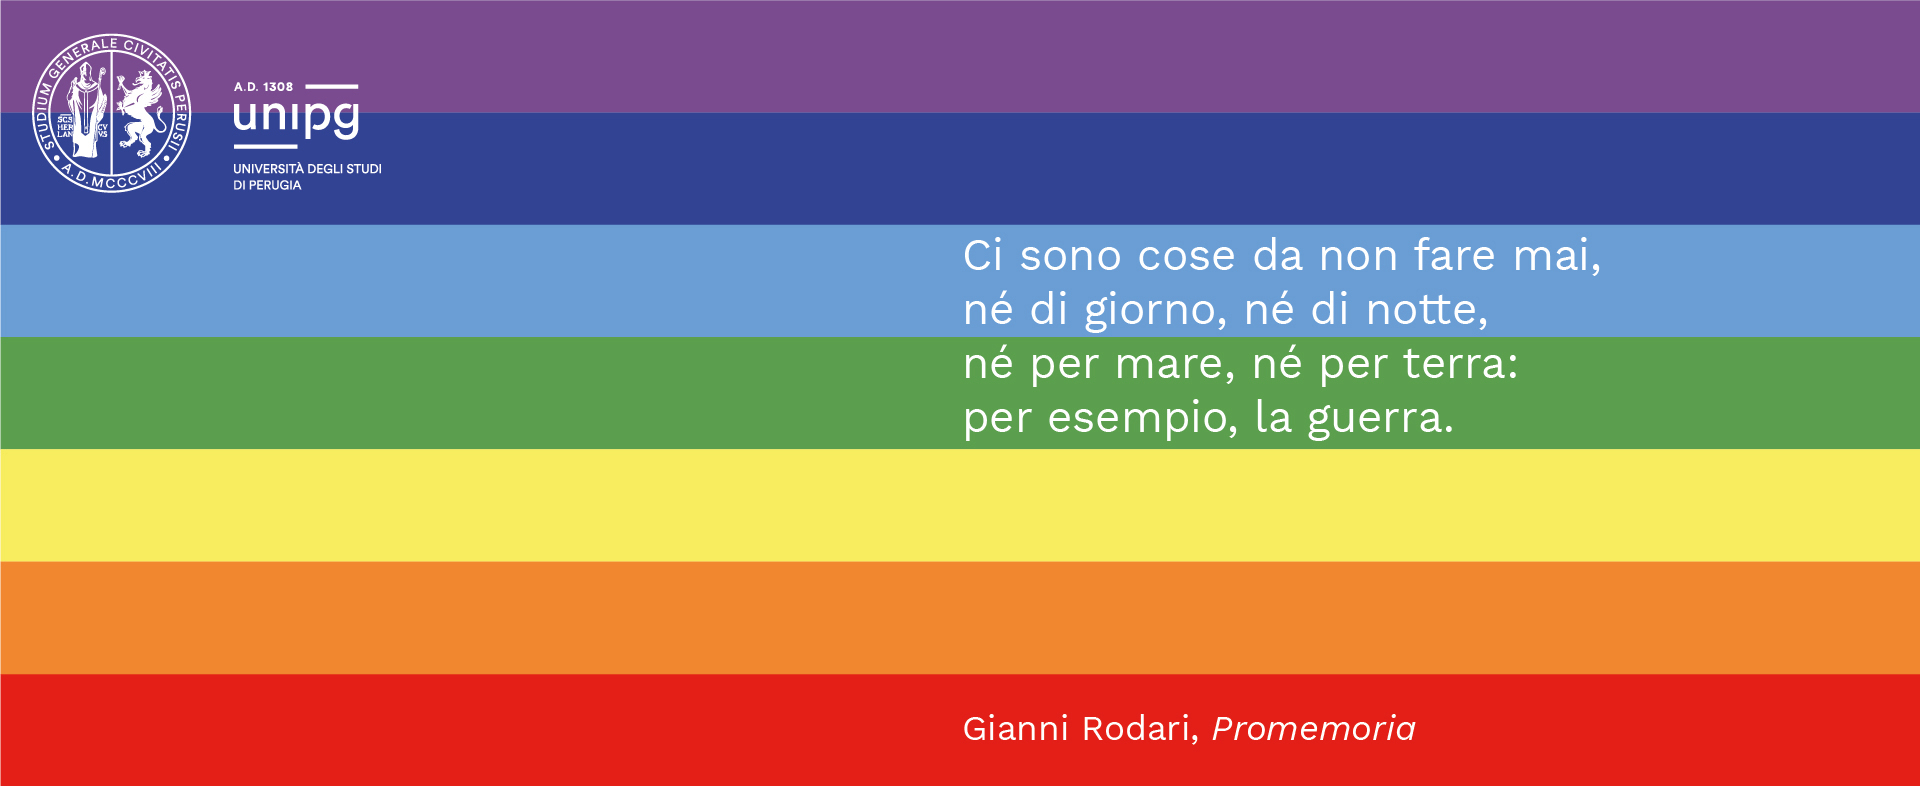 Gianni Rodari, promemoria